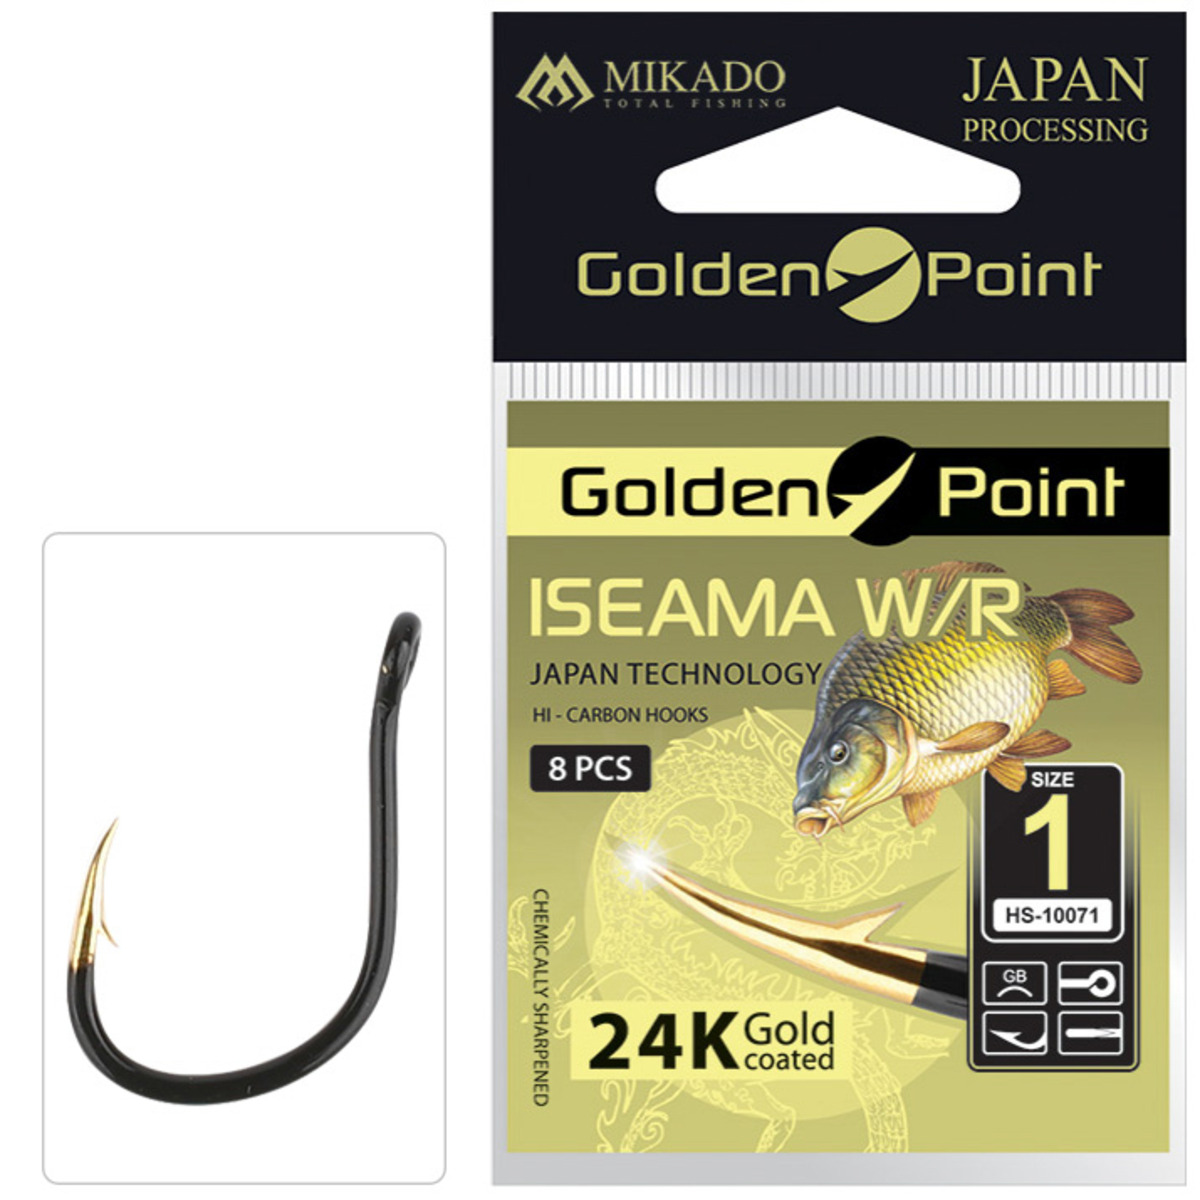 Mikado Golden Point Iseama - W / R n&#176; 1 GB